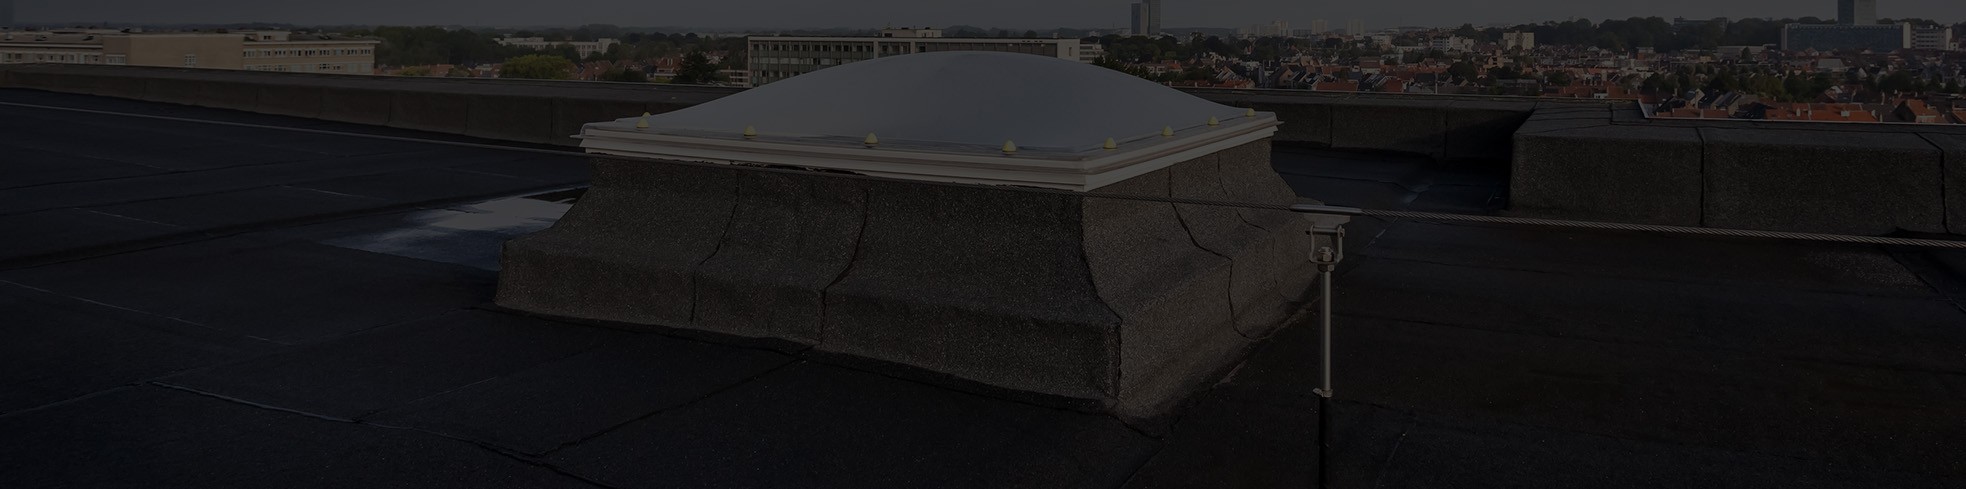 Flat Roof skylight installation in Milwaukee, WI 